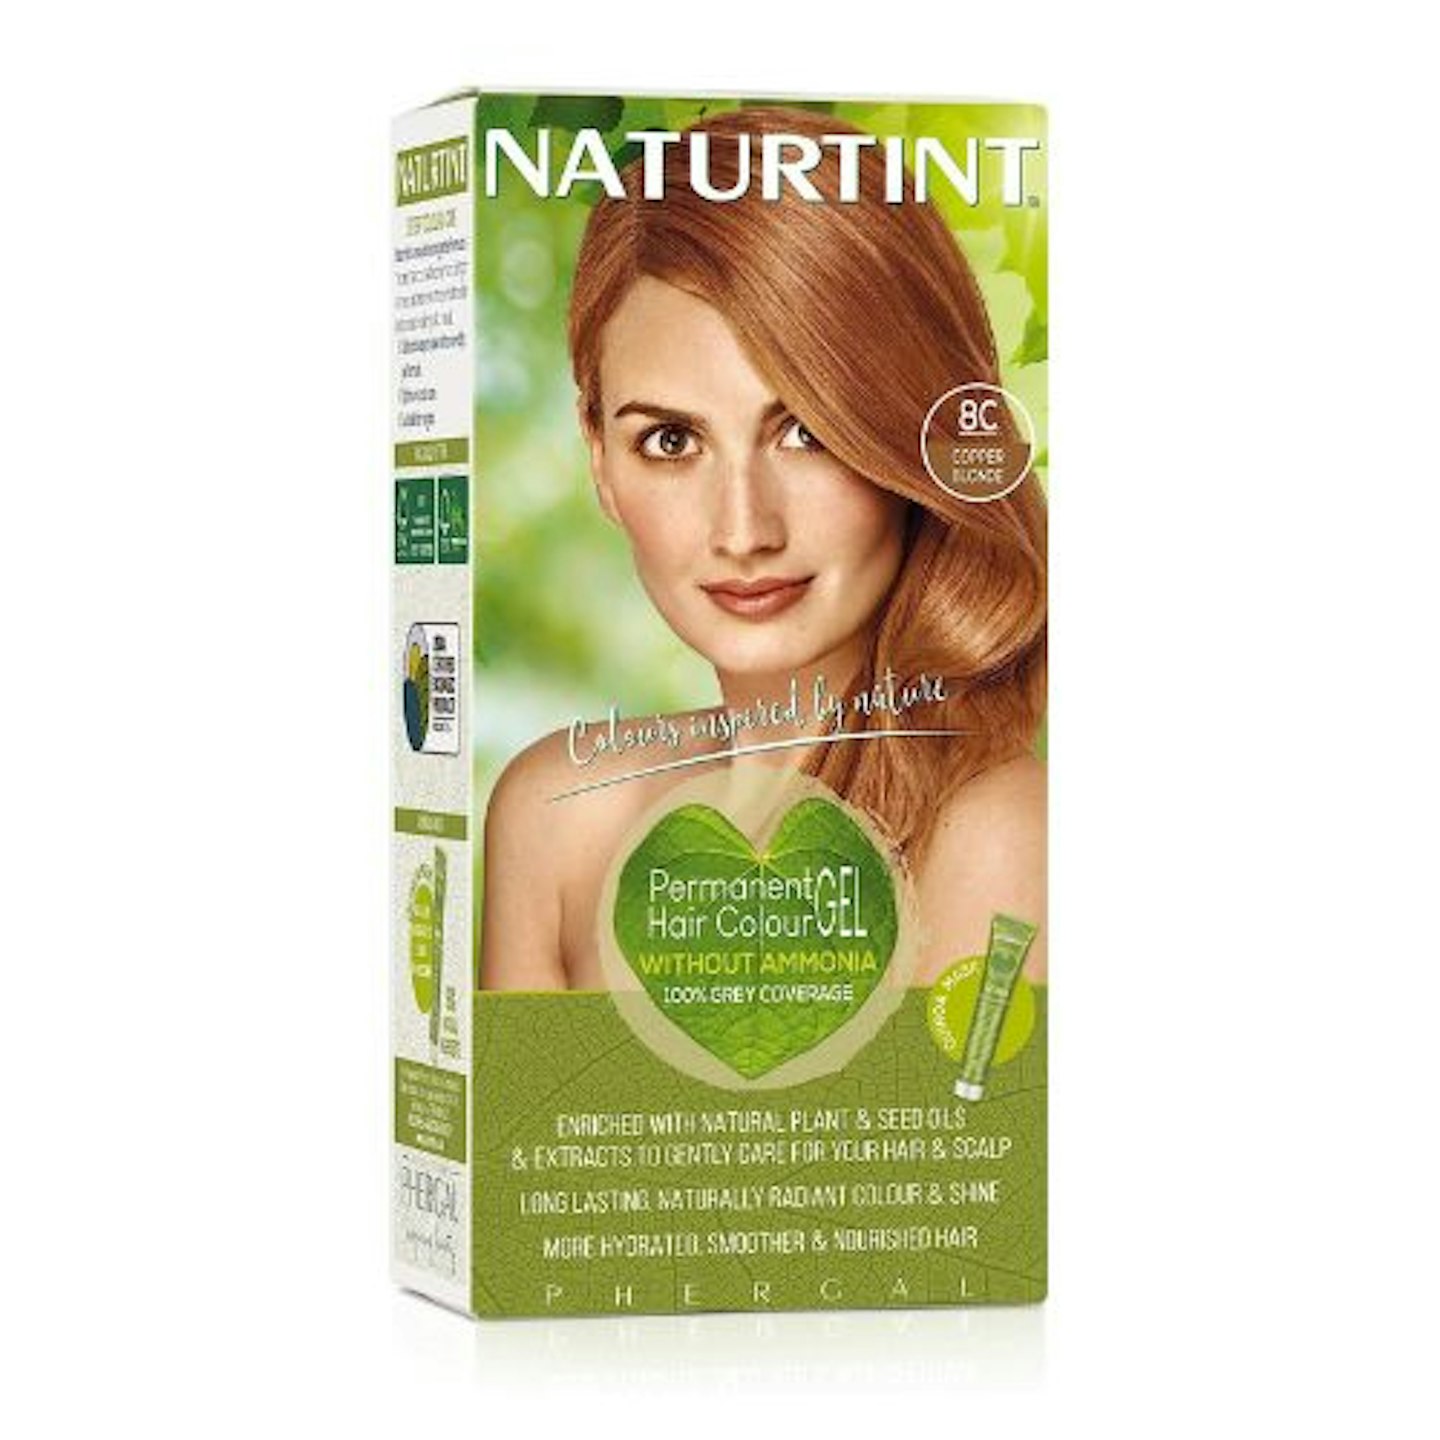 Naturtint, Permanent Hair Dye, 8C Copper Blonde